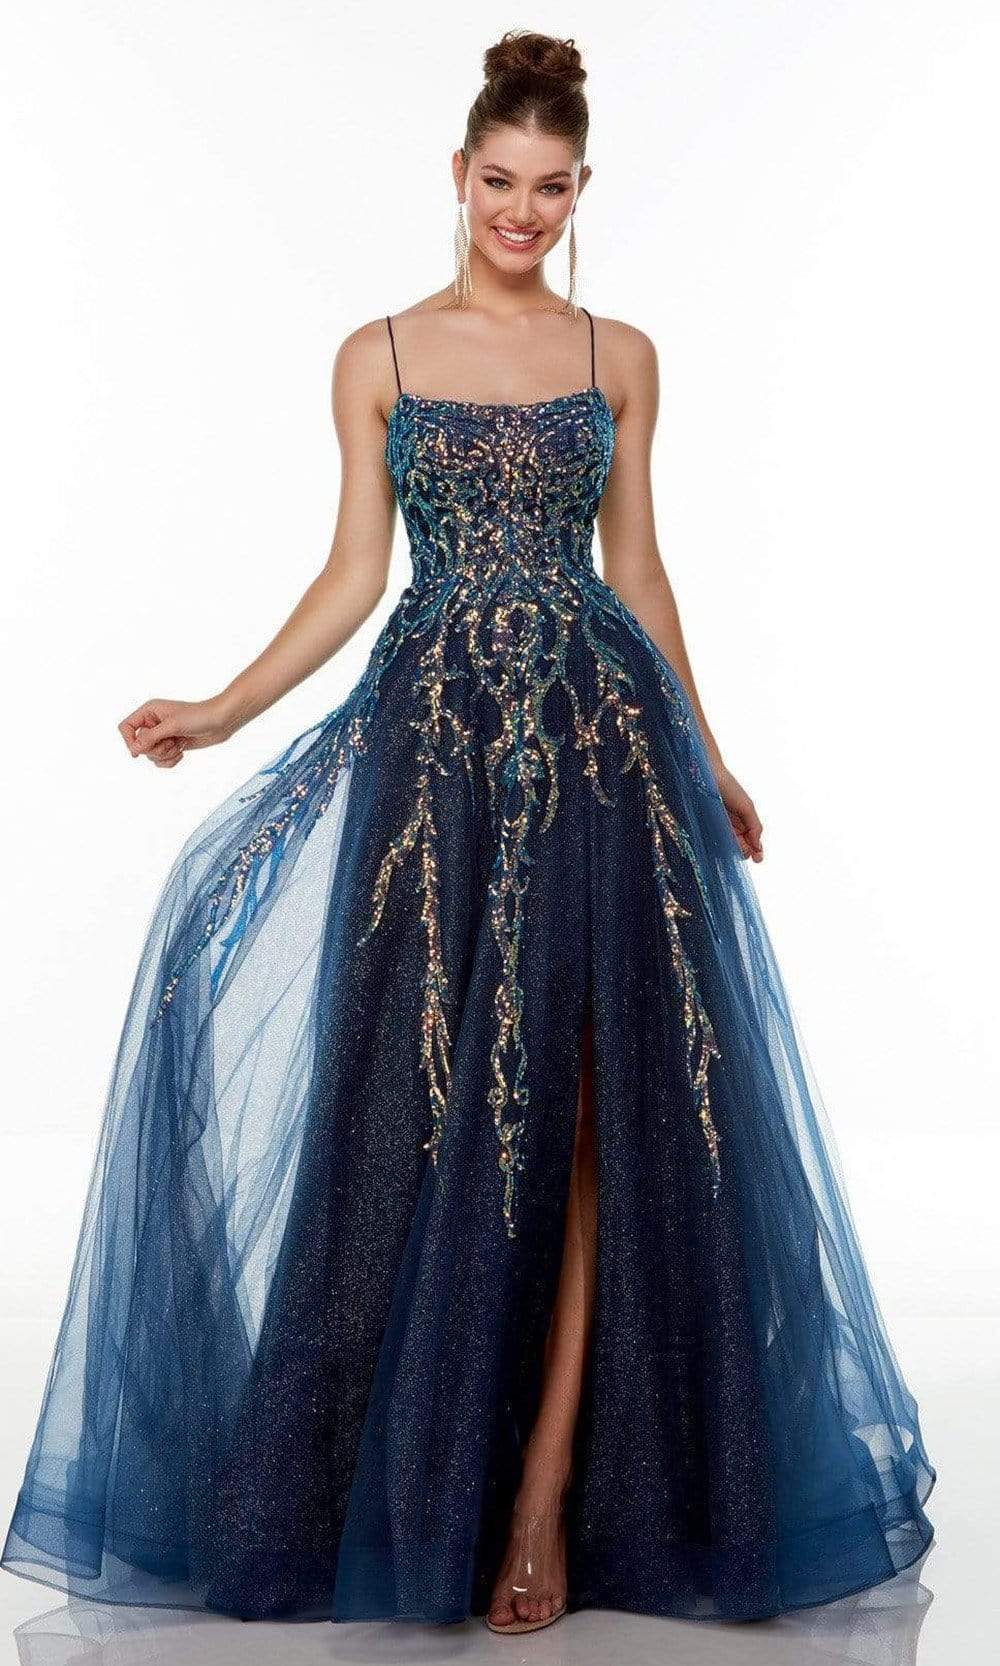 Alyce Paris - 61203 Sleeveless Embellished Ballgown Prom Dresses 000 / Navy